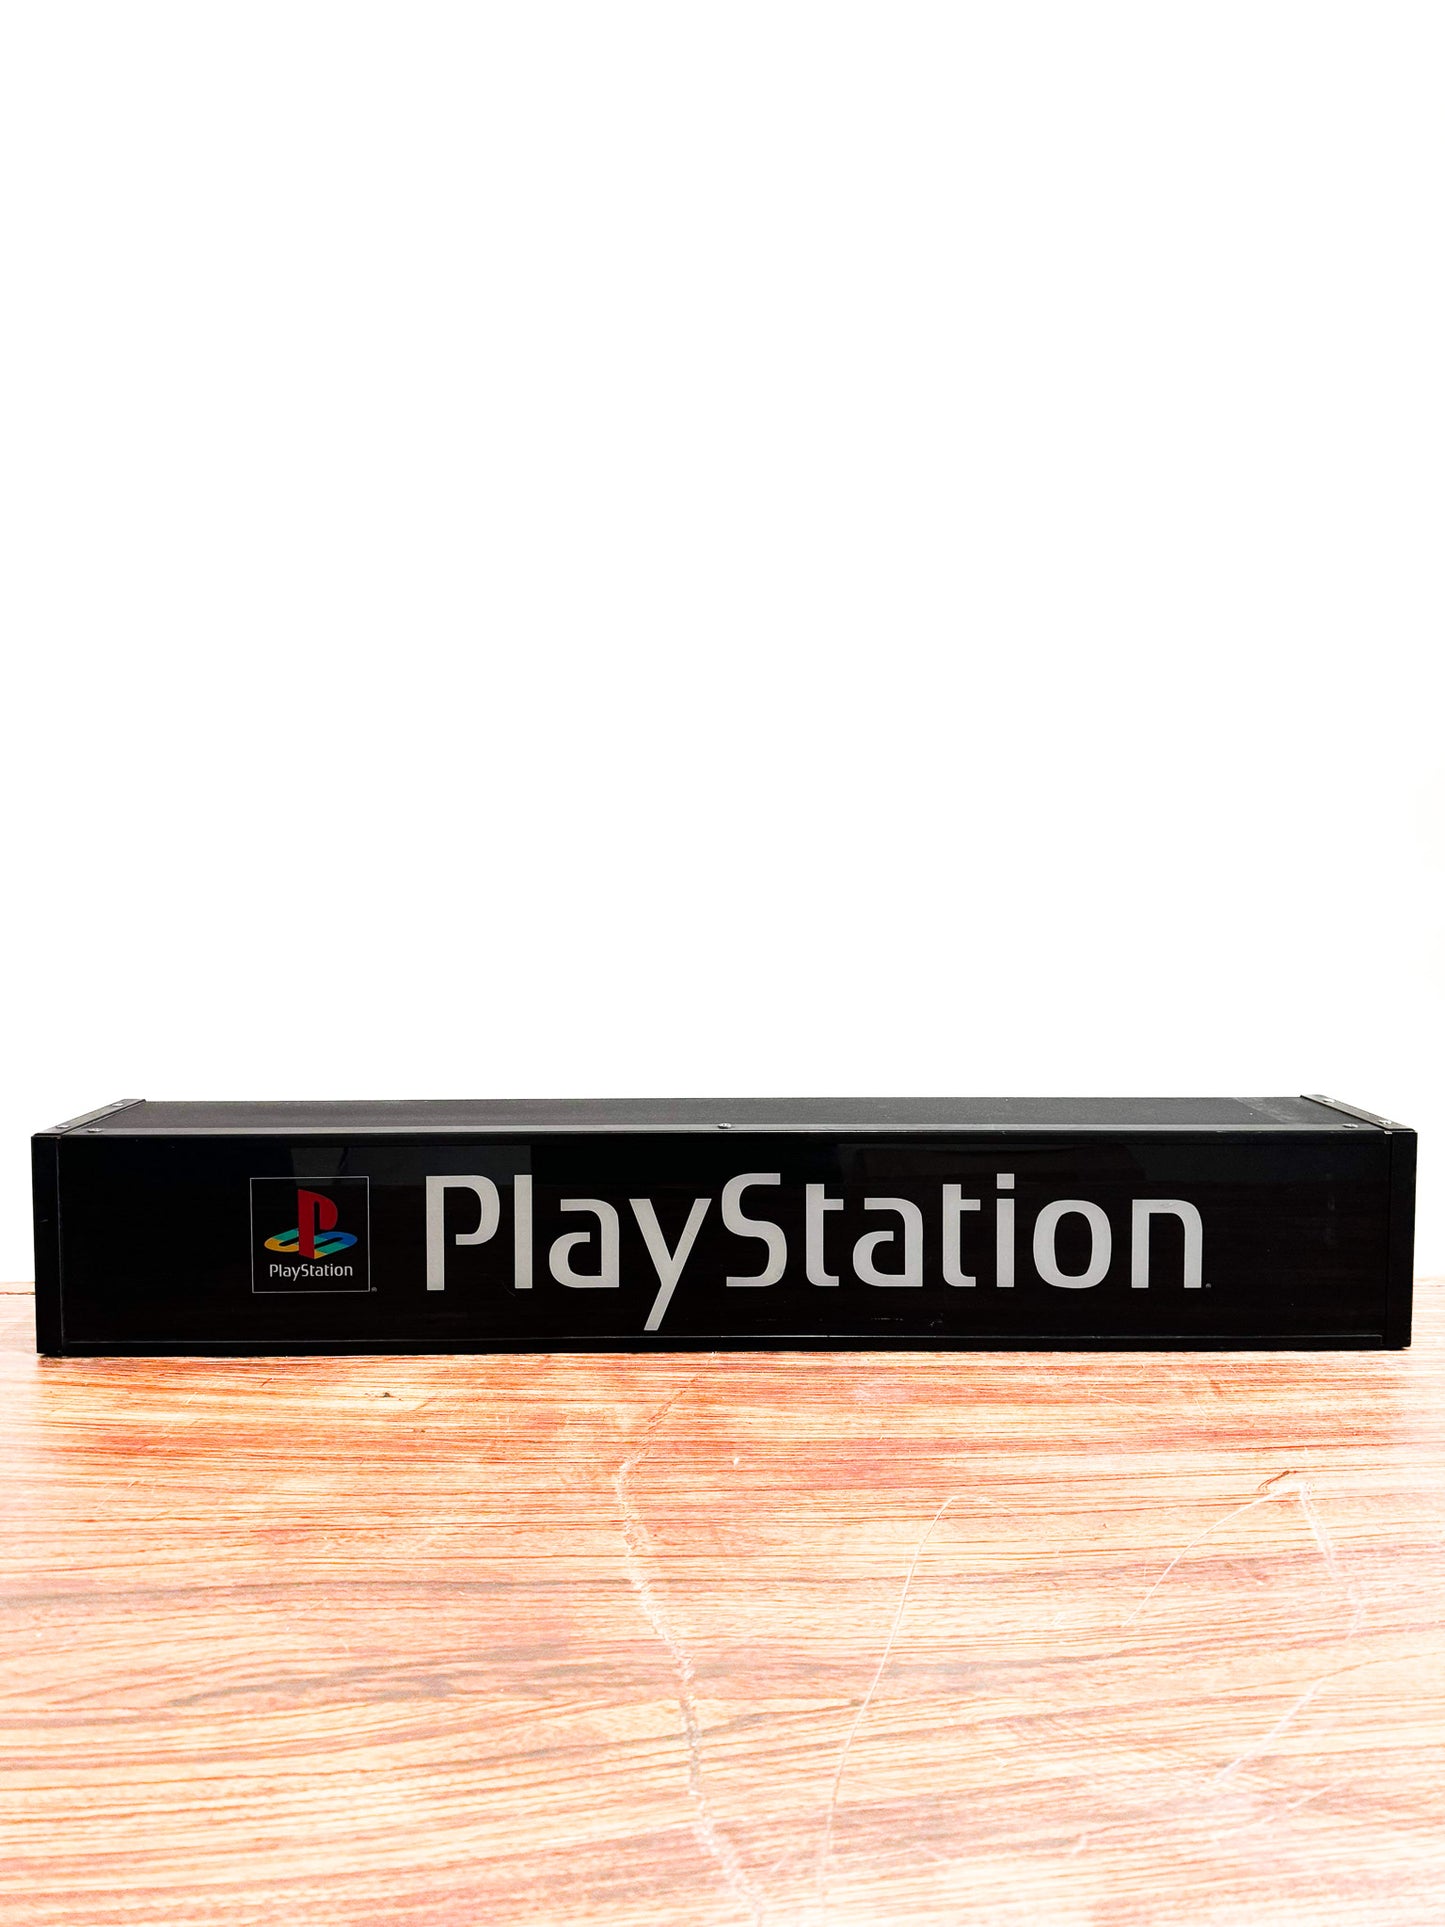 PlayStation Display Case Translite